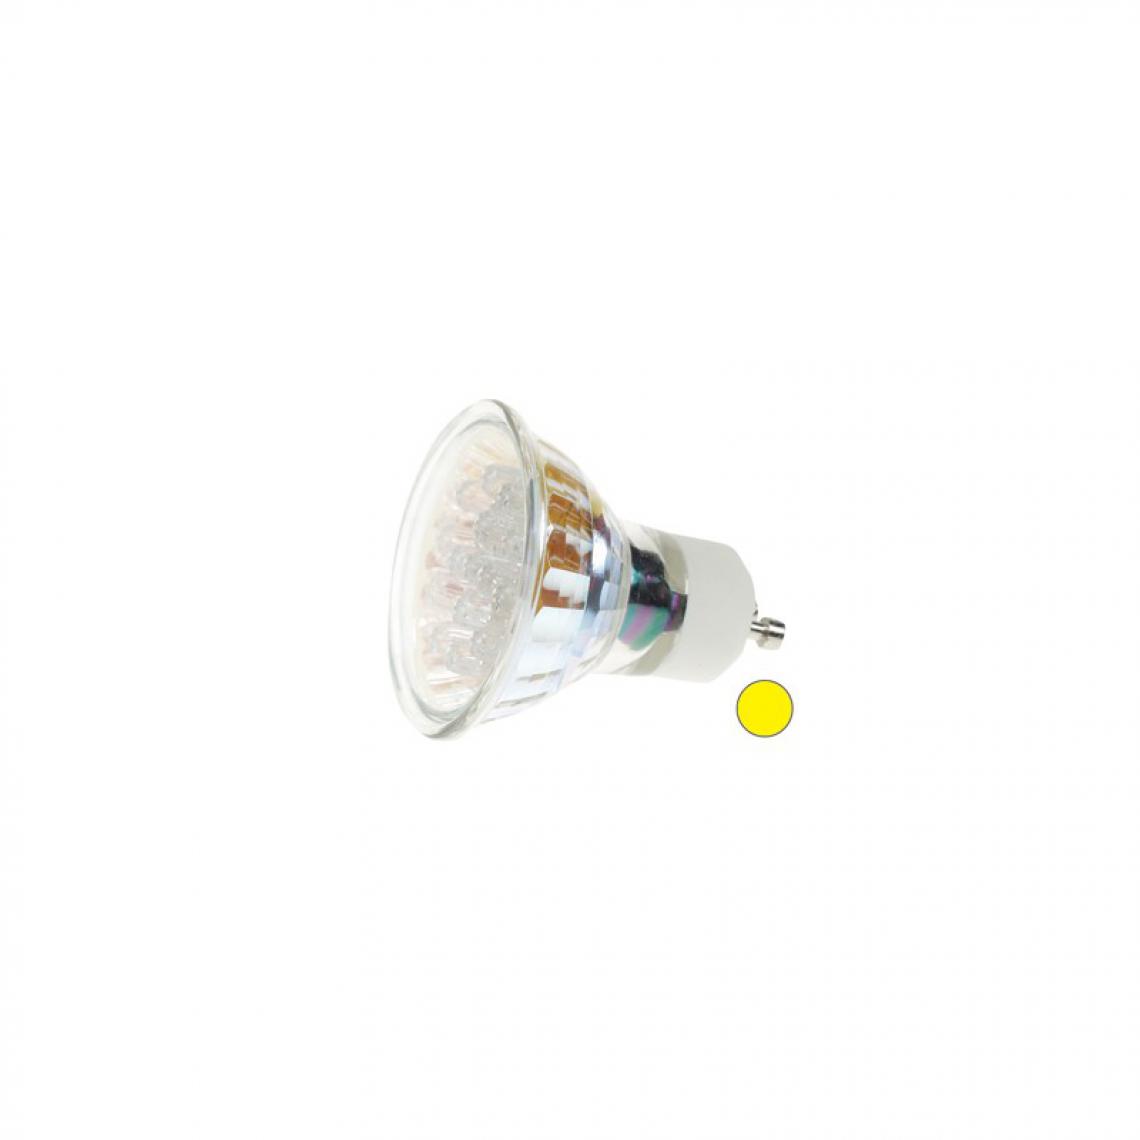 Perel - Lampe Led Gu10 Jaune - 240Vca - Ampoules LED